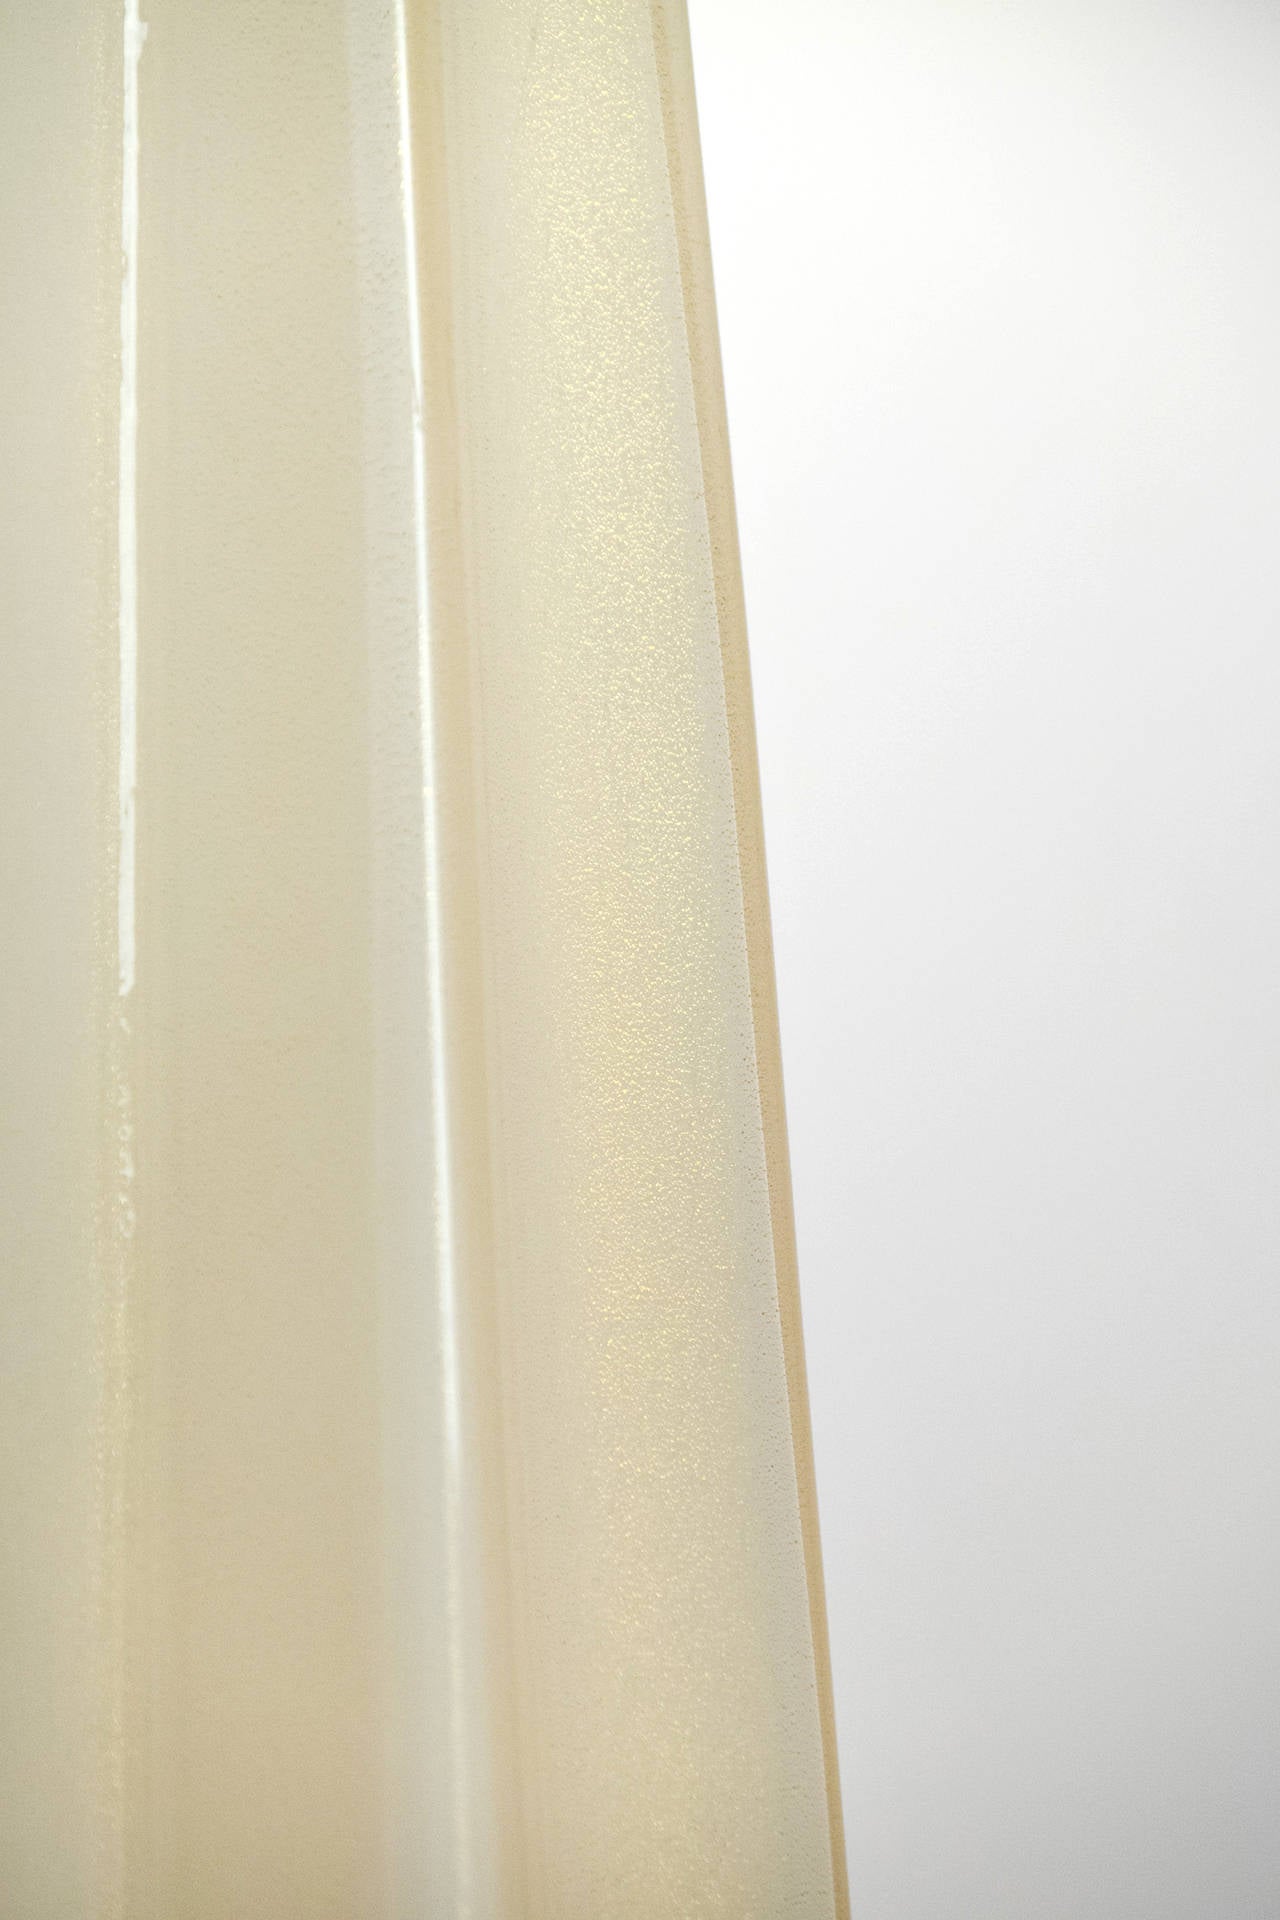 Murano Glass Murano Opalina and Gold Glass Lamps